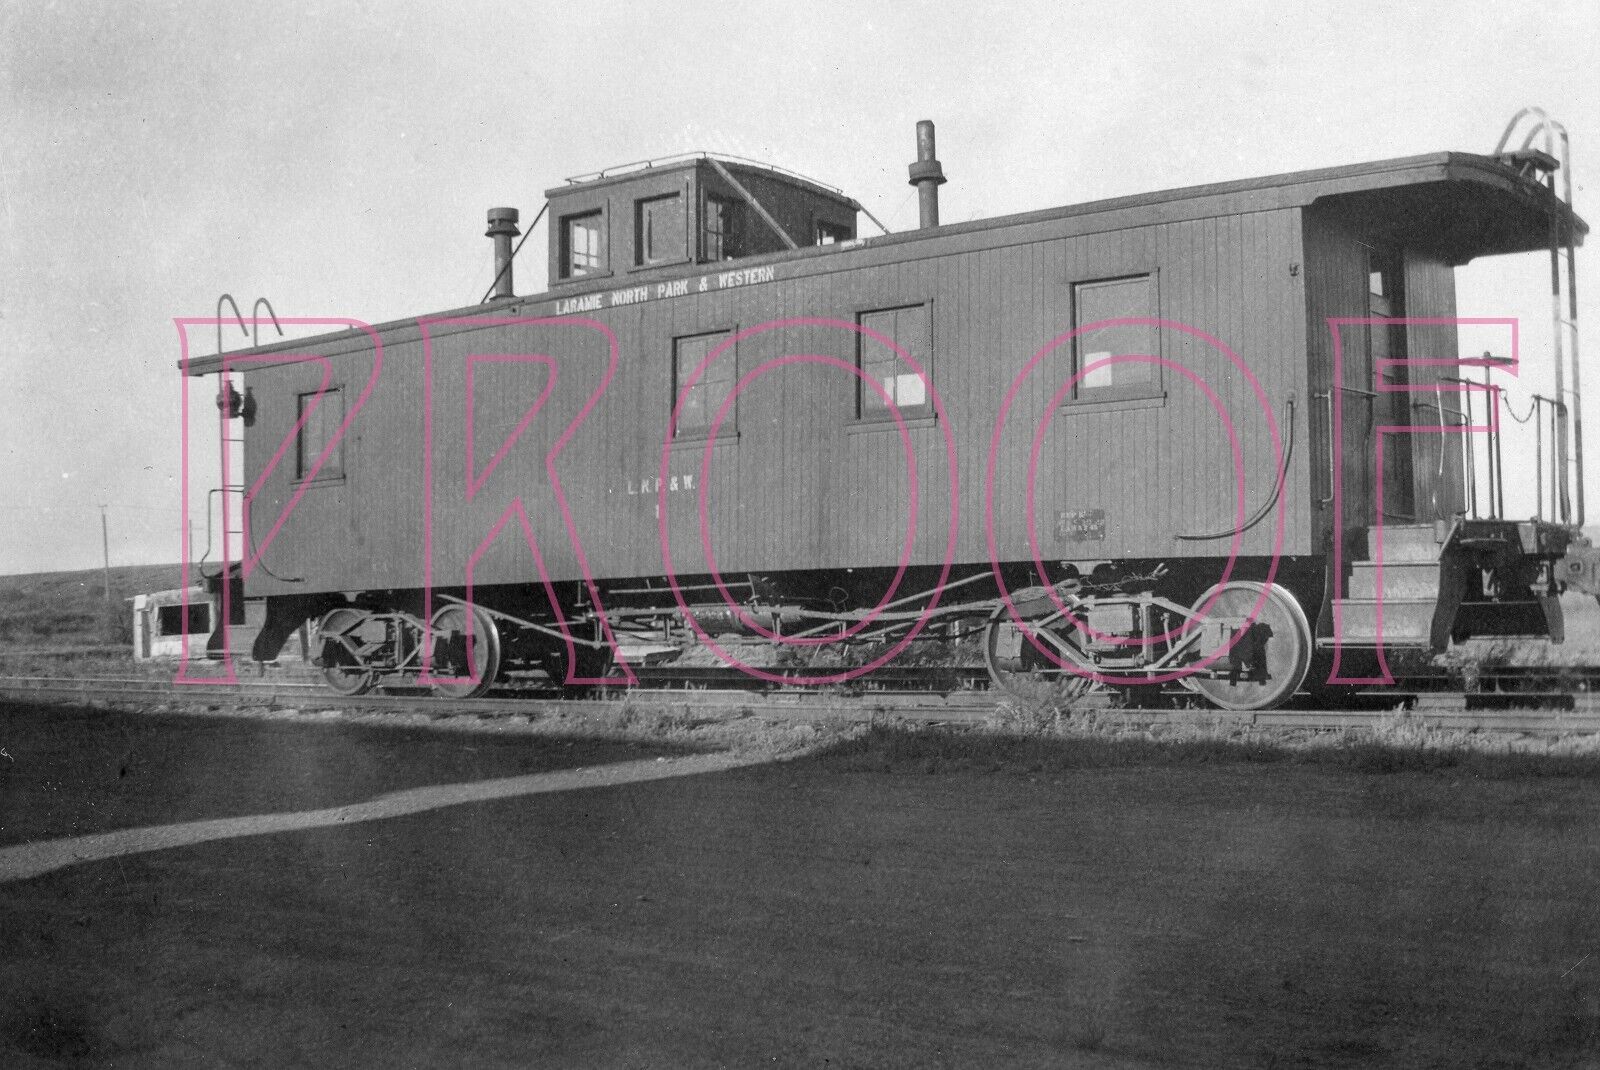 Laramie, North Park & Western (LNP&W) Caboose 1 at Walton, CO in 1945 - 8x10